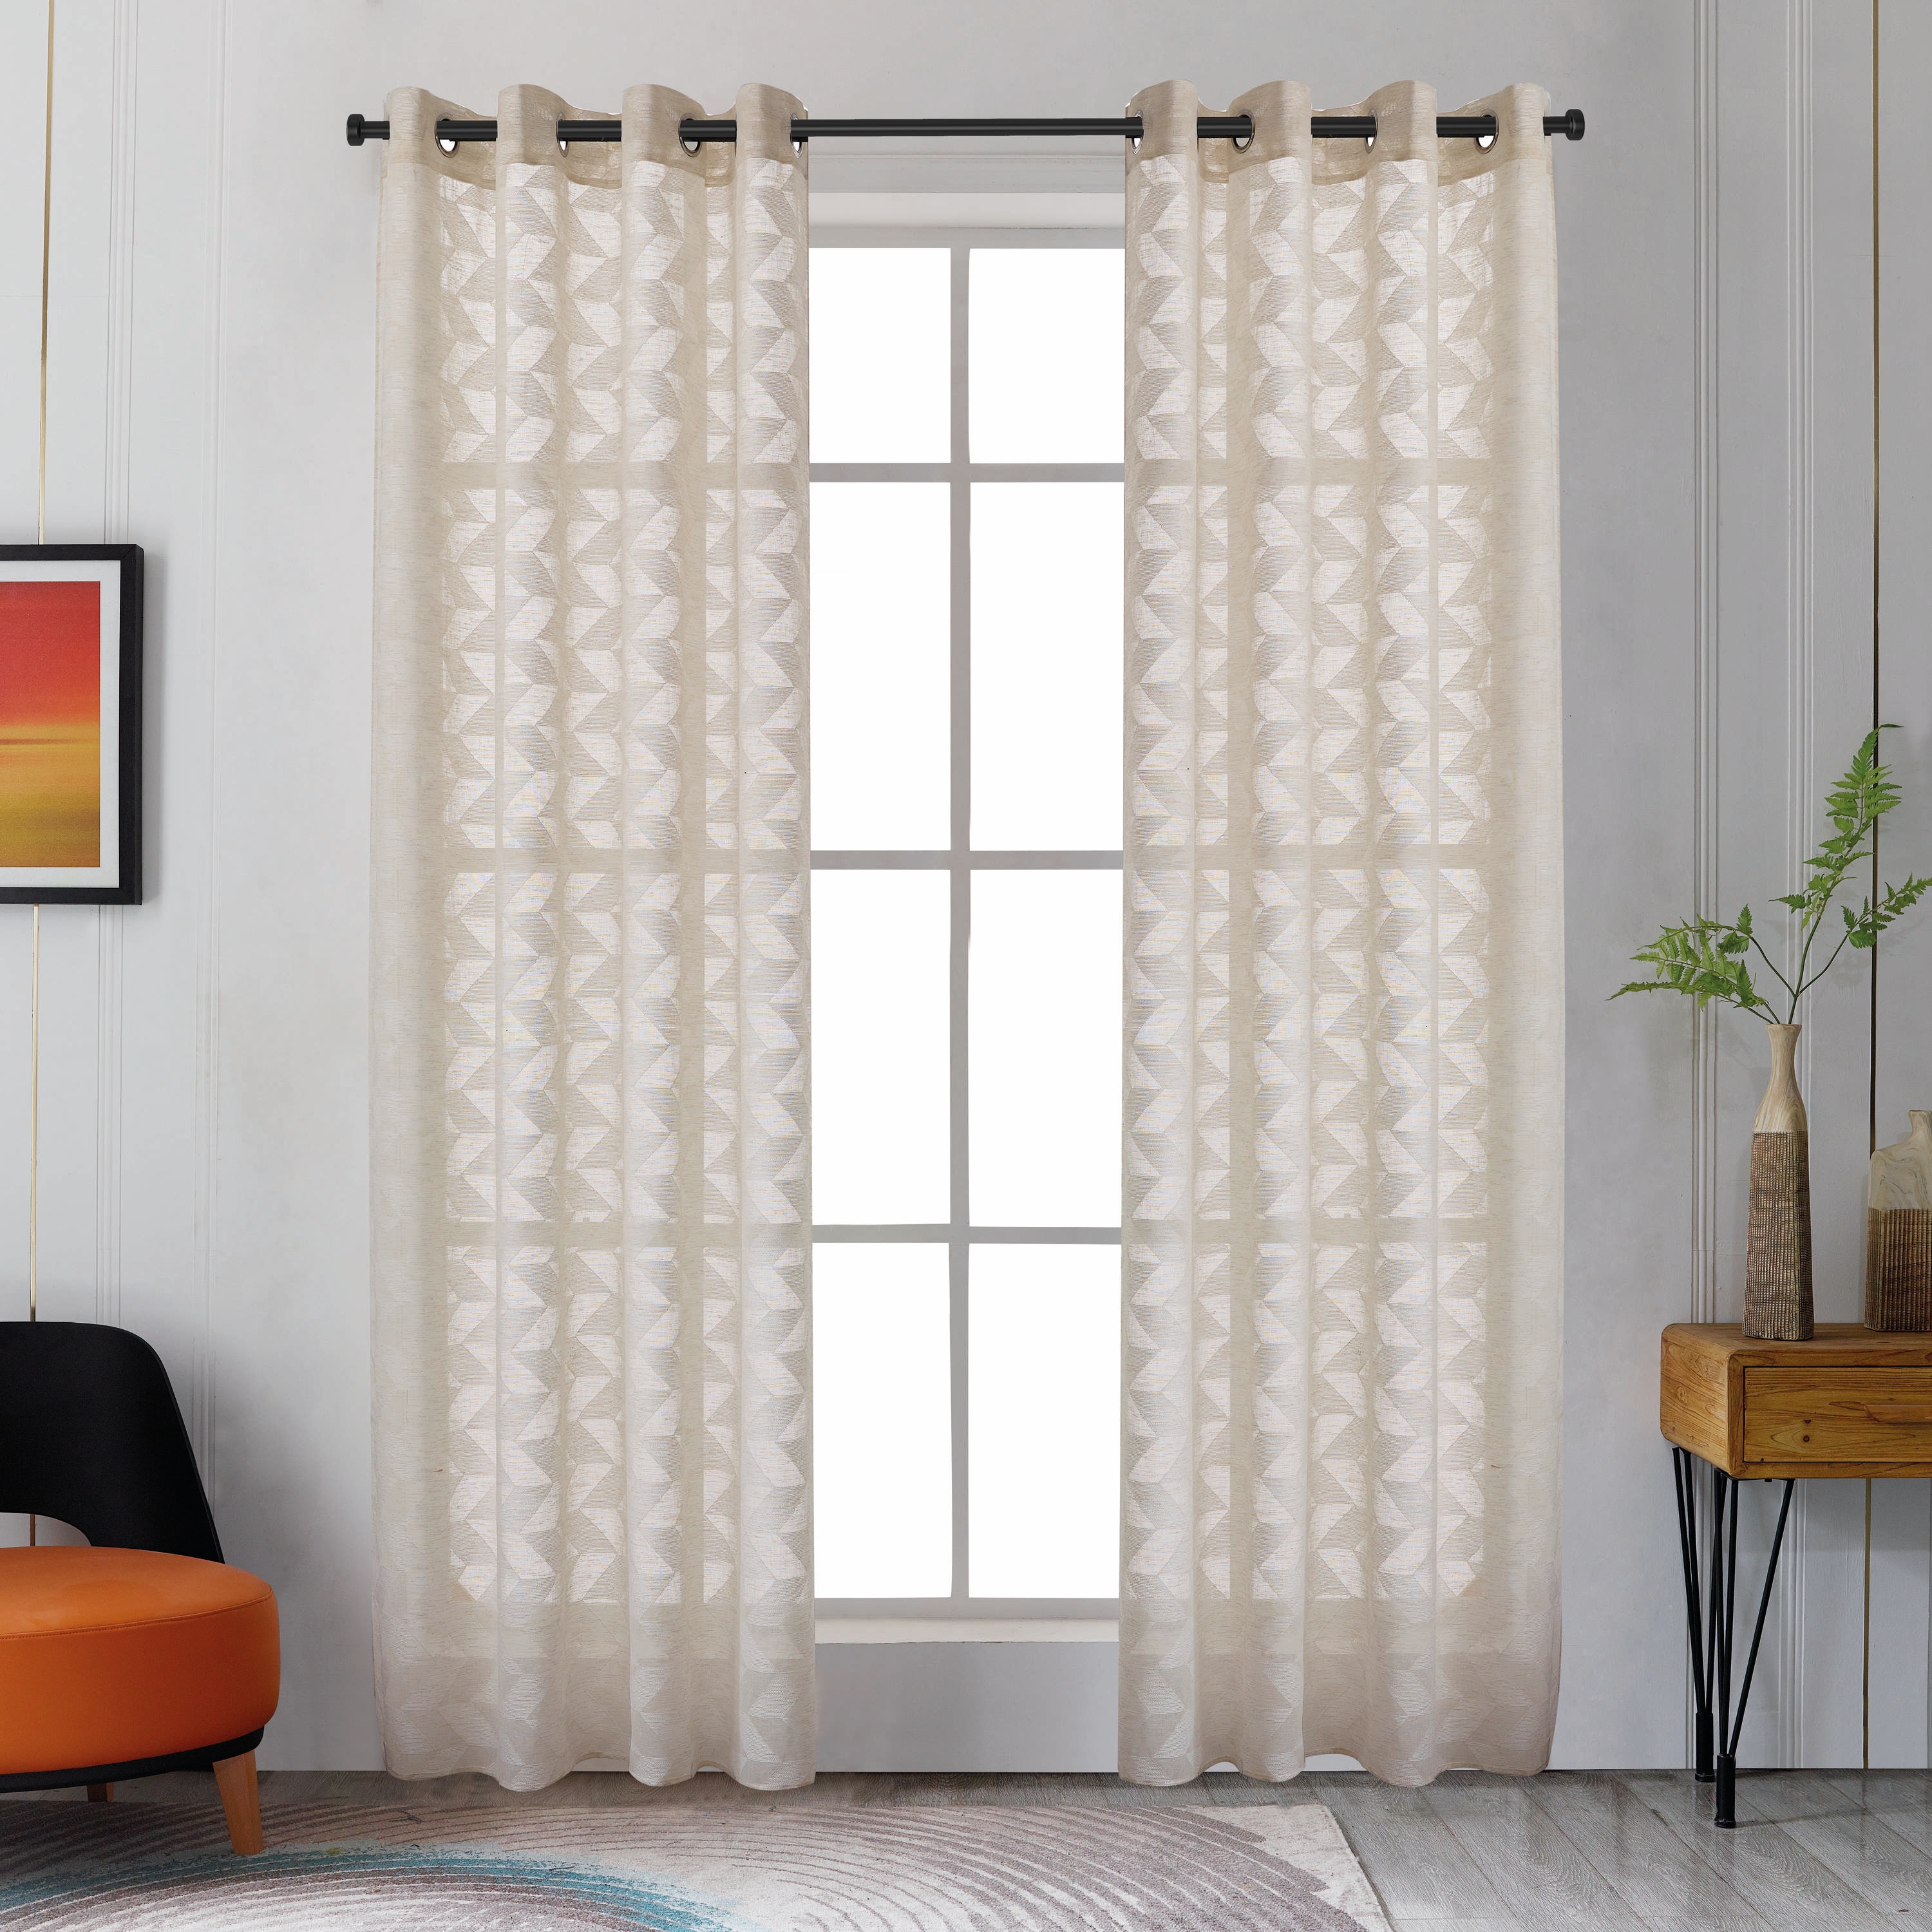 1 Chevron TEAL Pattern Design Voile Sheer 2Tone Window Curtain Drape Panel 